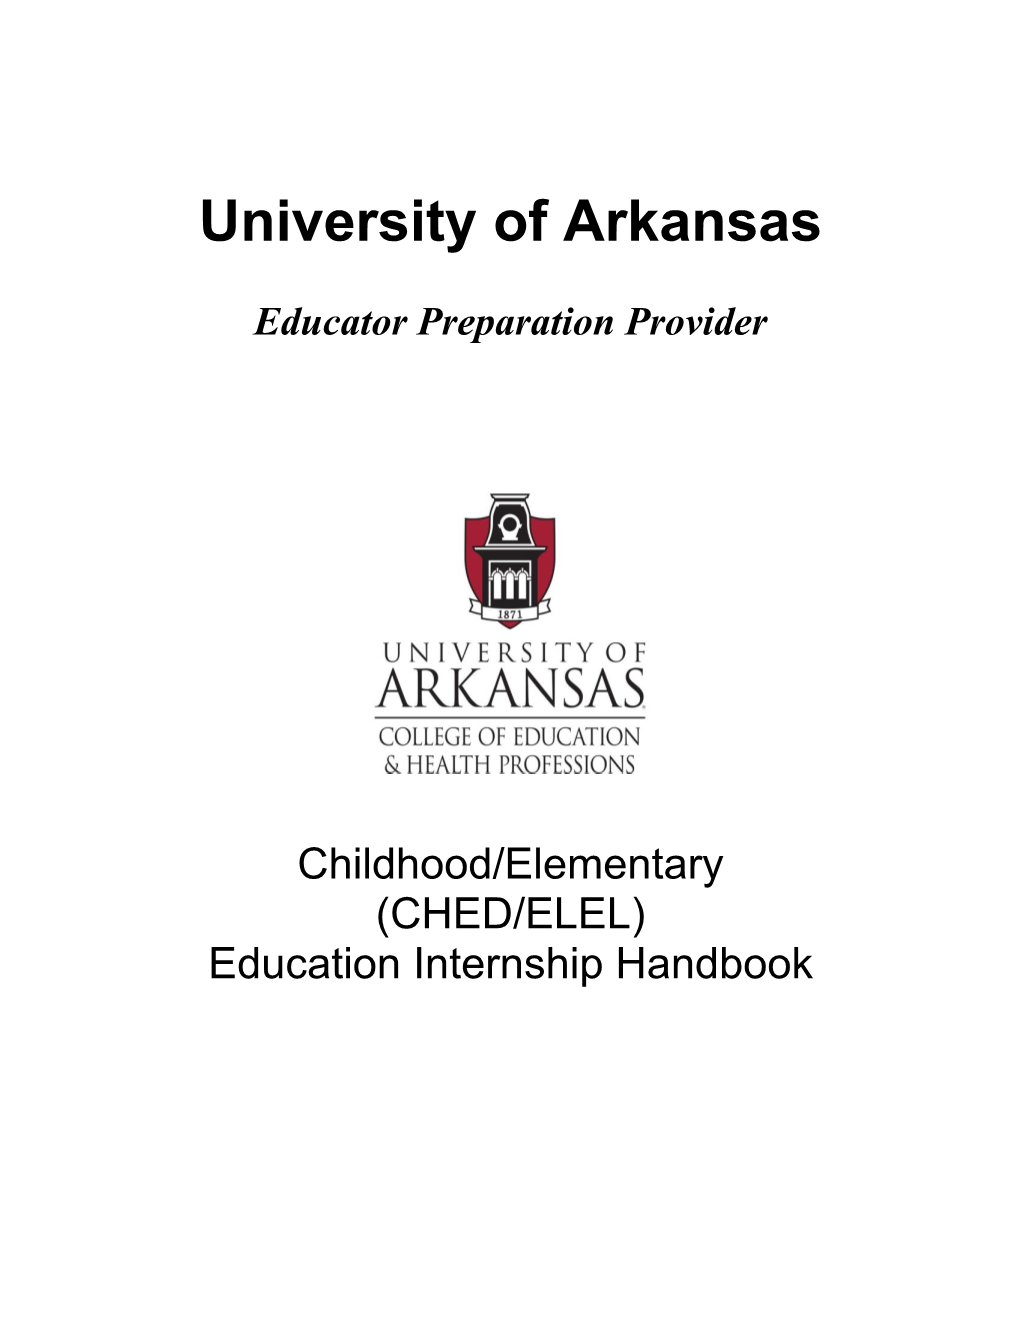 Childhood Education Internship Handbook